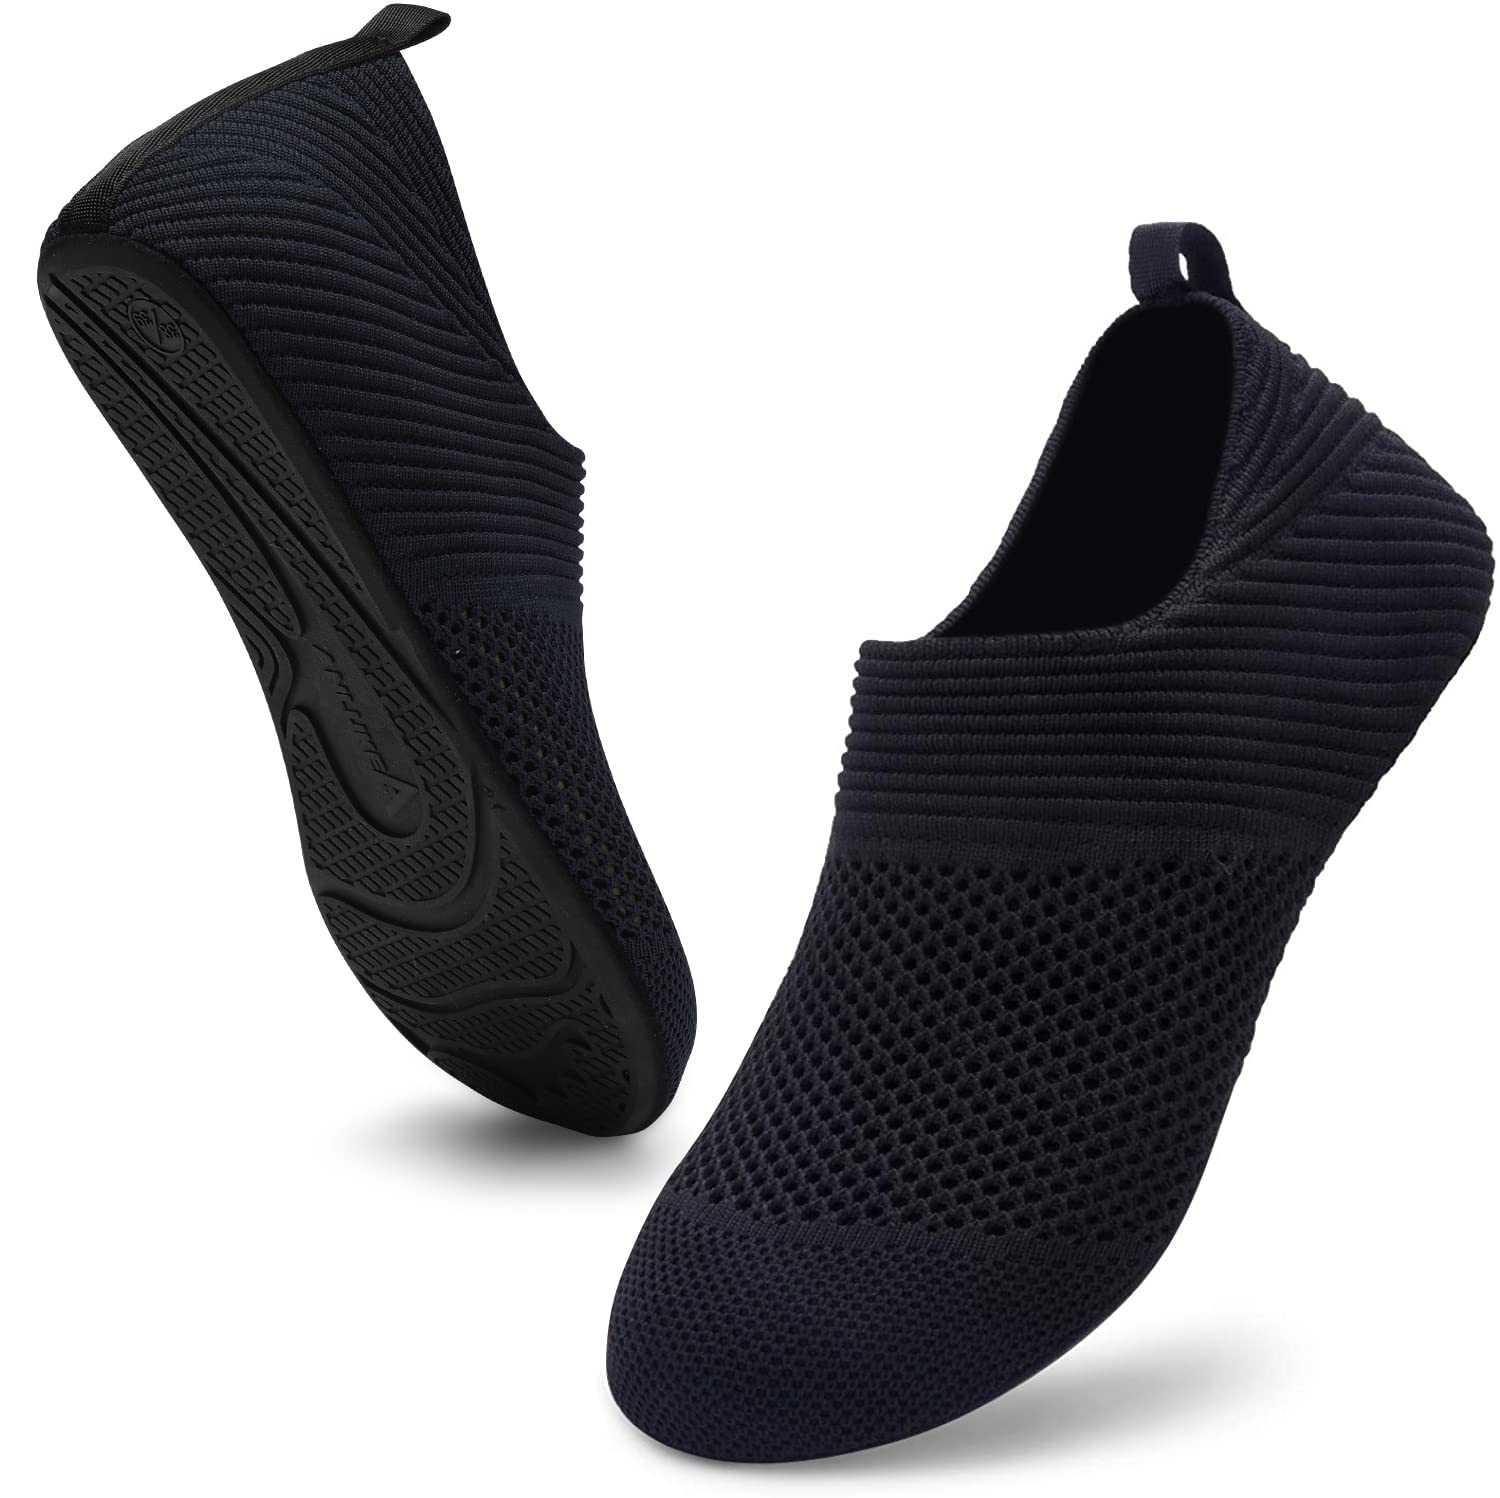  ANLUKE Barefoot Quick-Dry Water Sports Shoes Aqua Socks for  Swim Beach Pool Surf Yoga for Women Men (34/35, KPink)